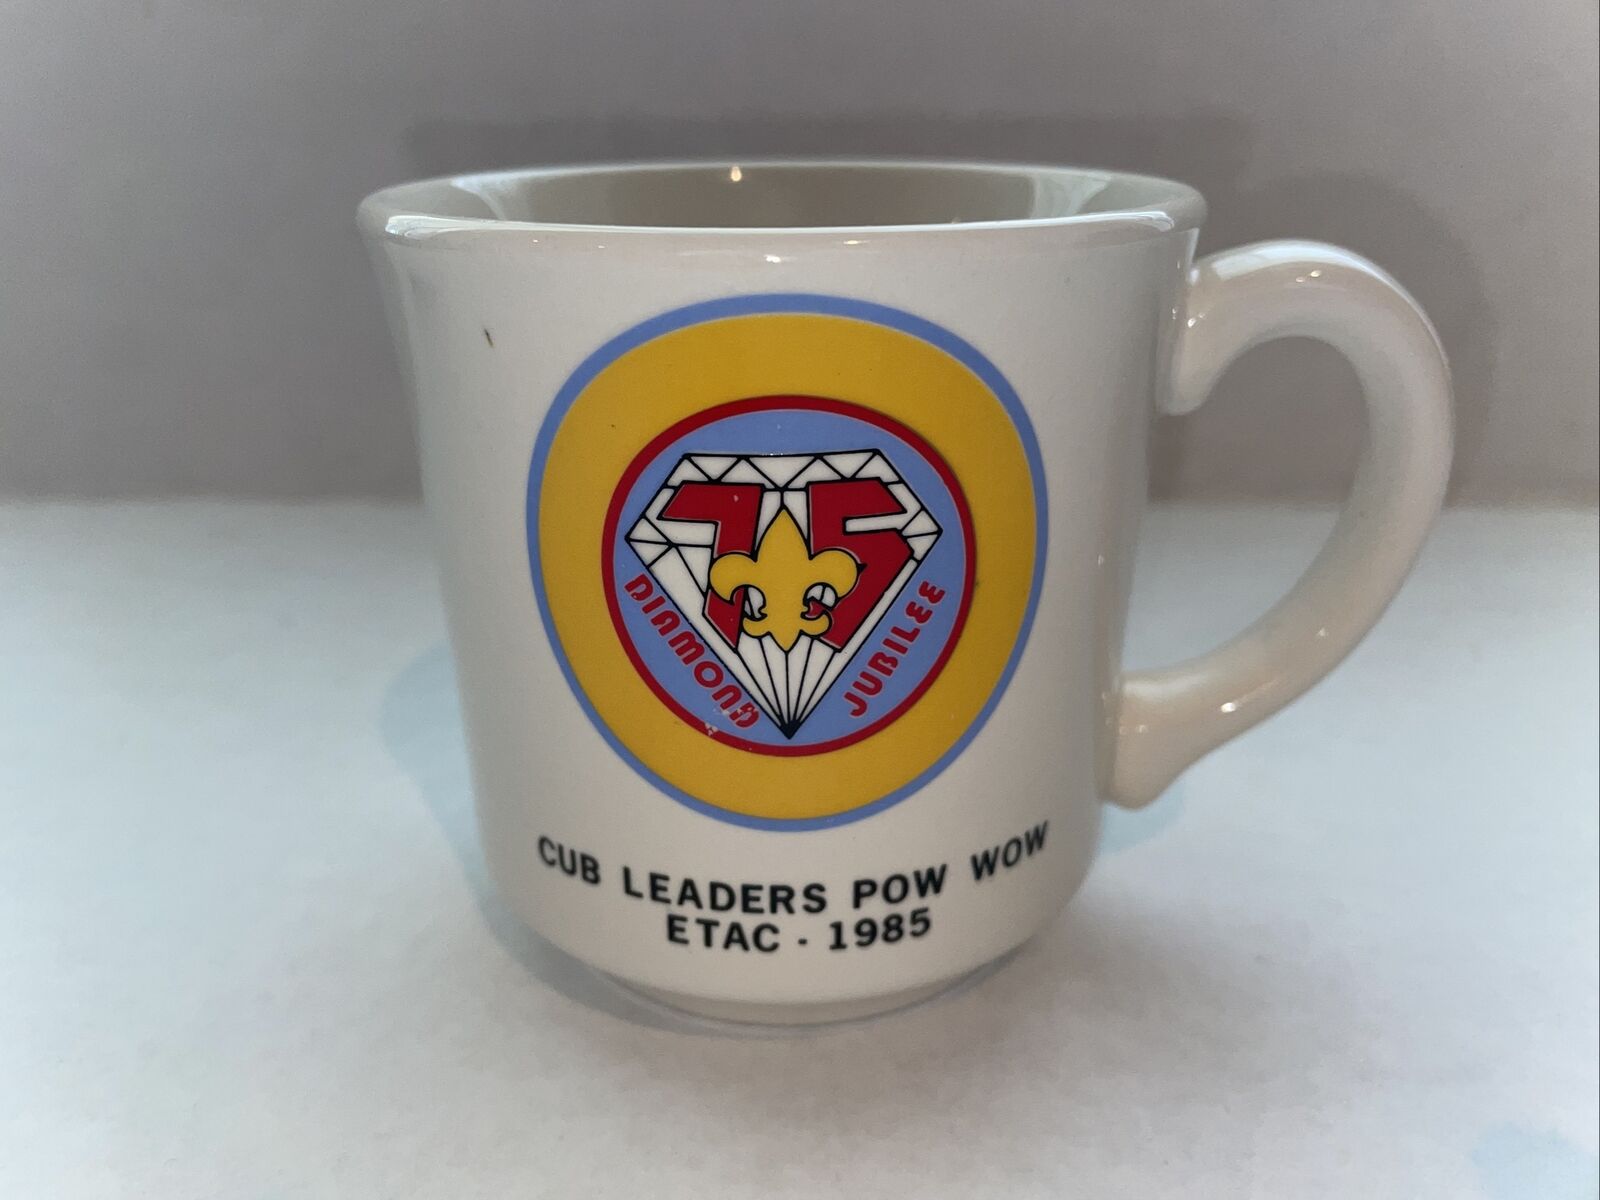 1985 Bsa Vintage 75th Diamond Jubilee Coffee Cup Mug Leaders Pow Wow Boy Scouts